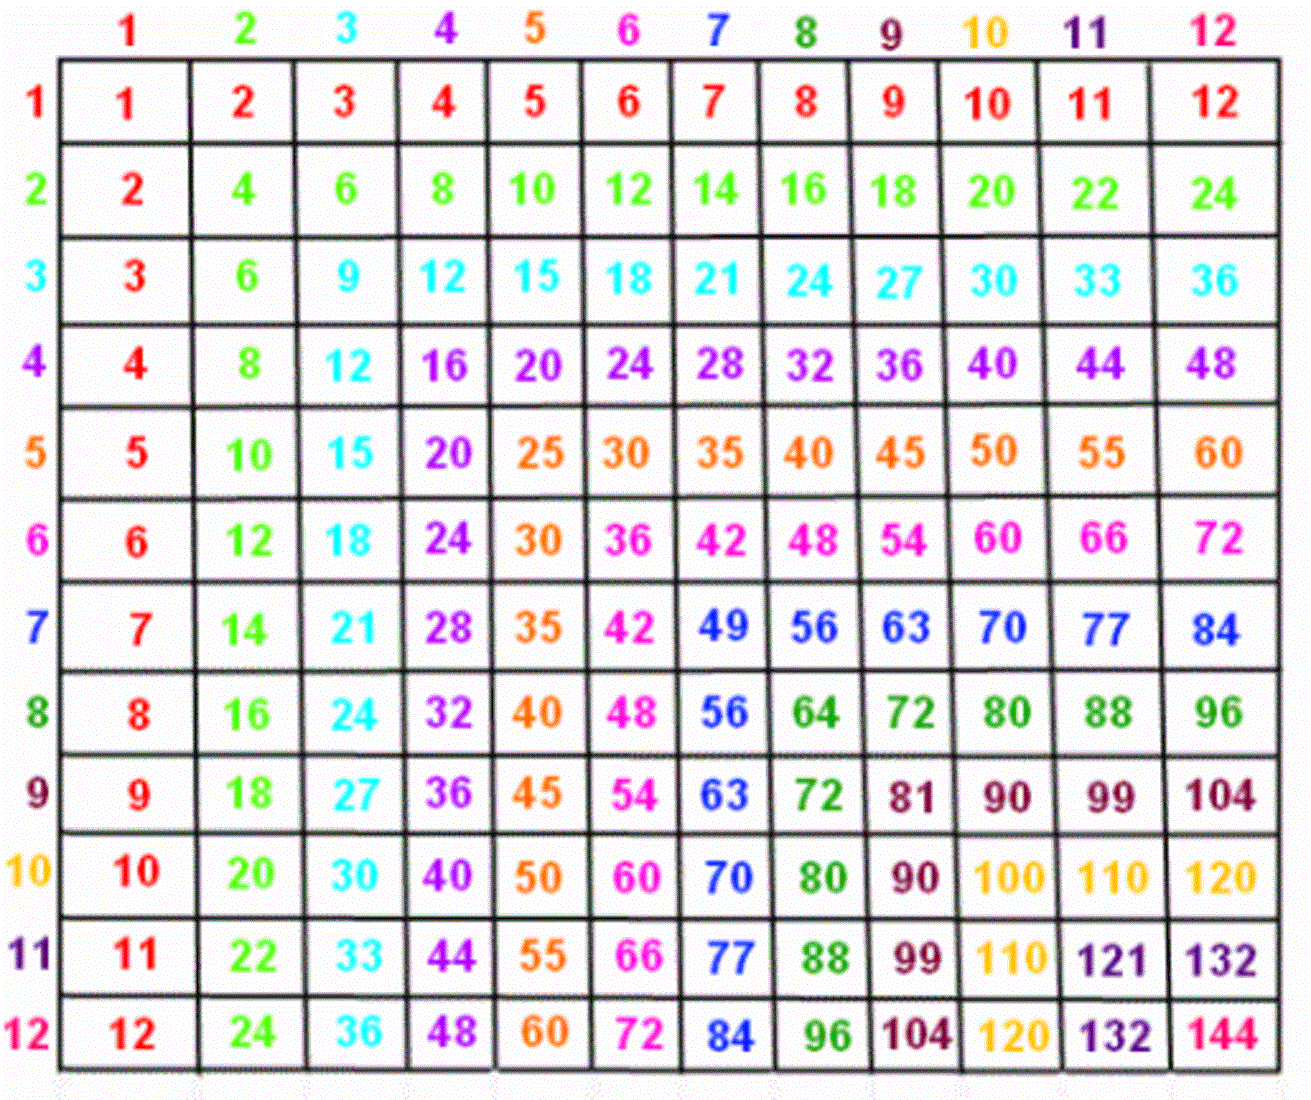 Multiplication Table Printable 1 12 #2 Multiplication times table 